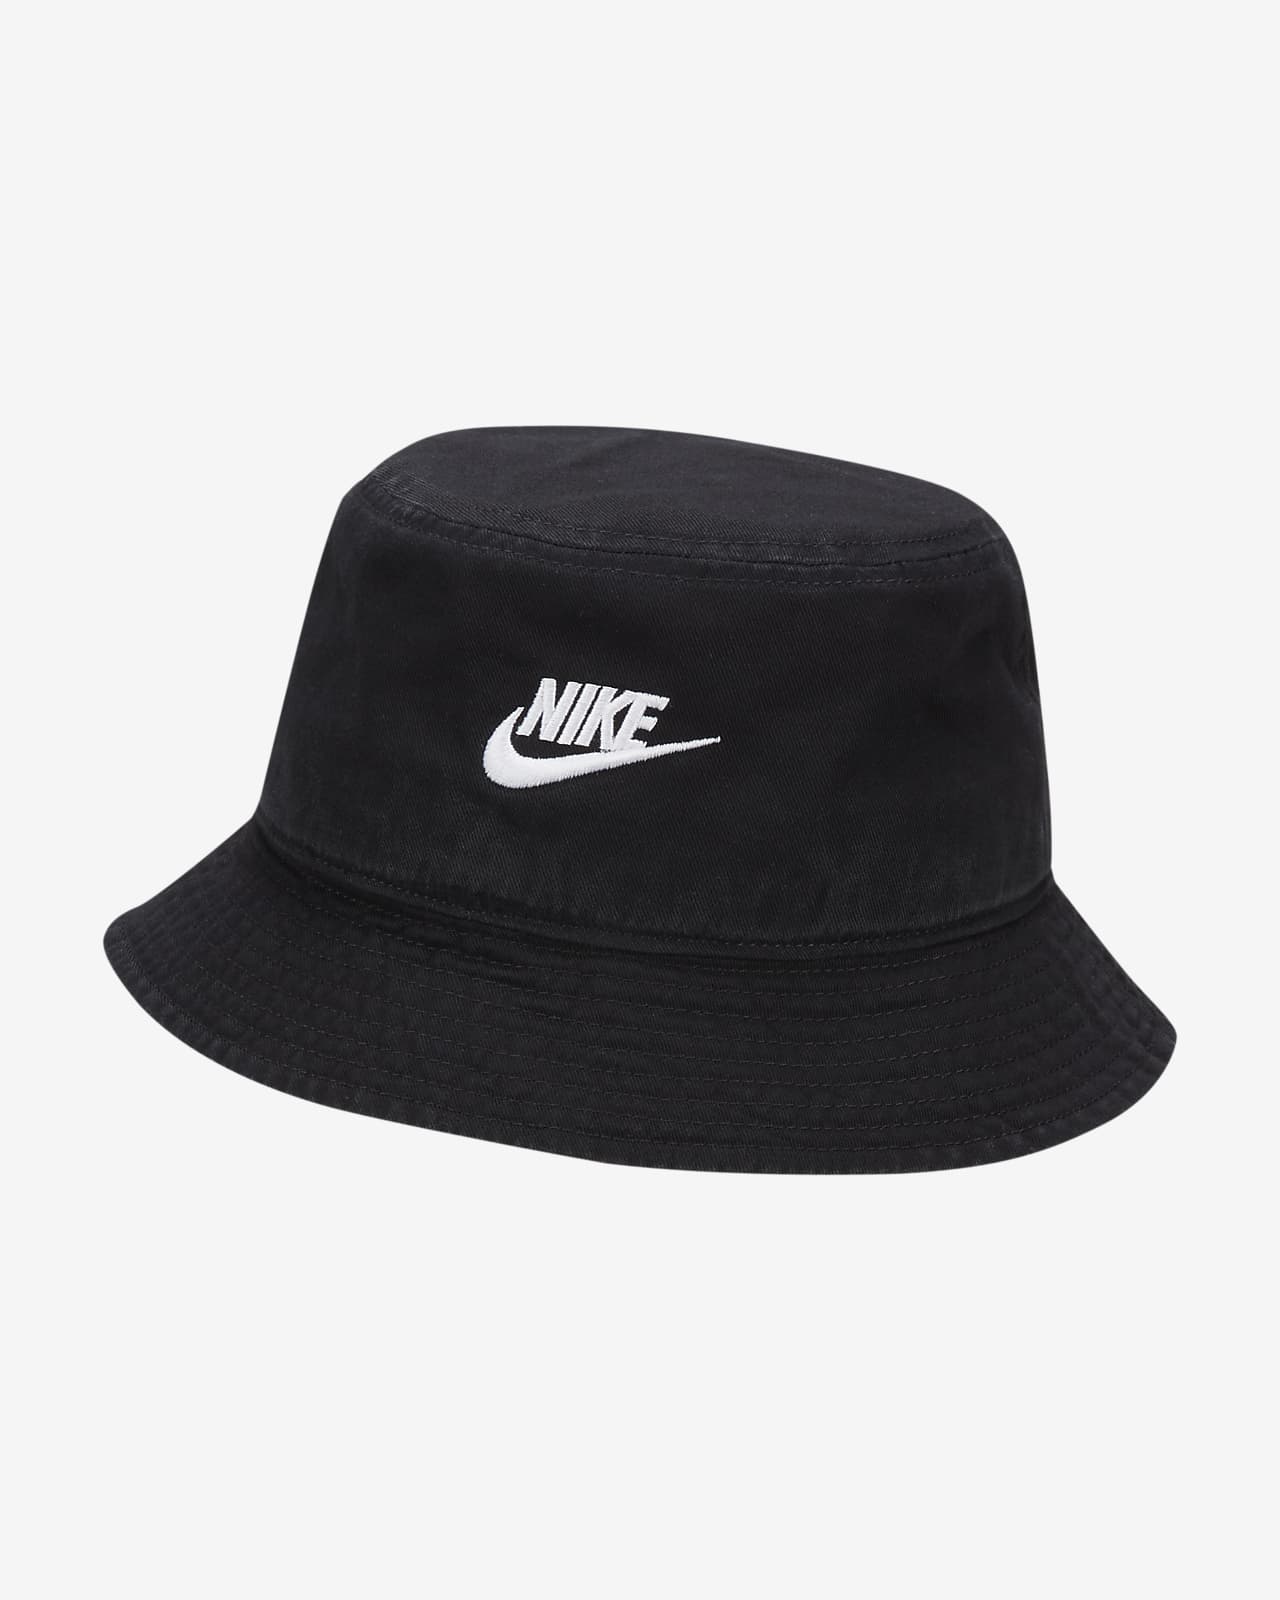 Nike Apex Futura Sombrero tipo pescador Futura con efecto lavado